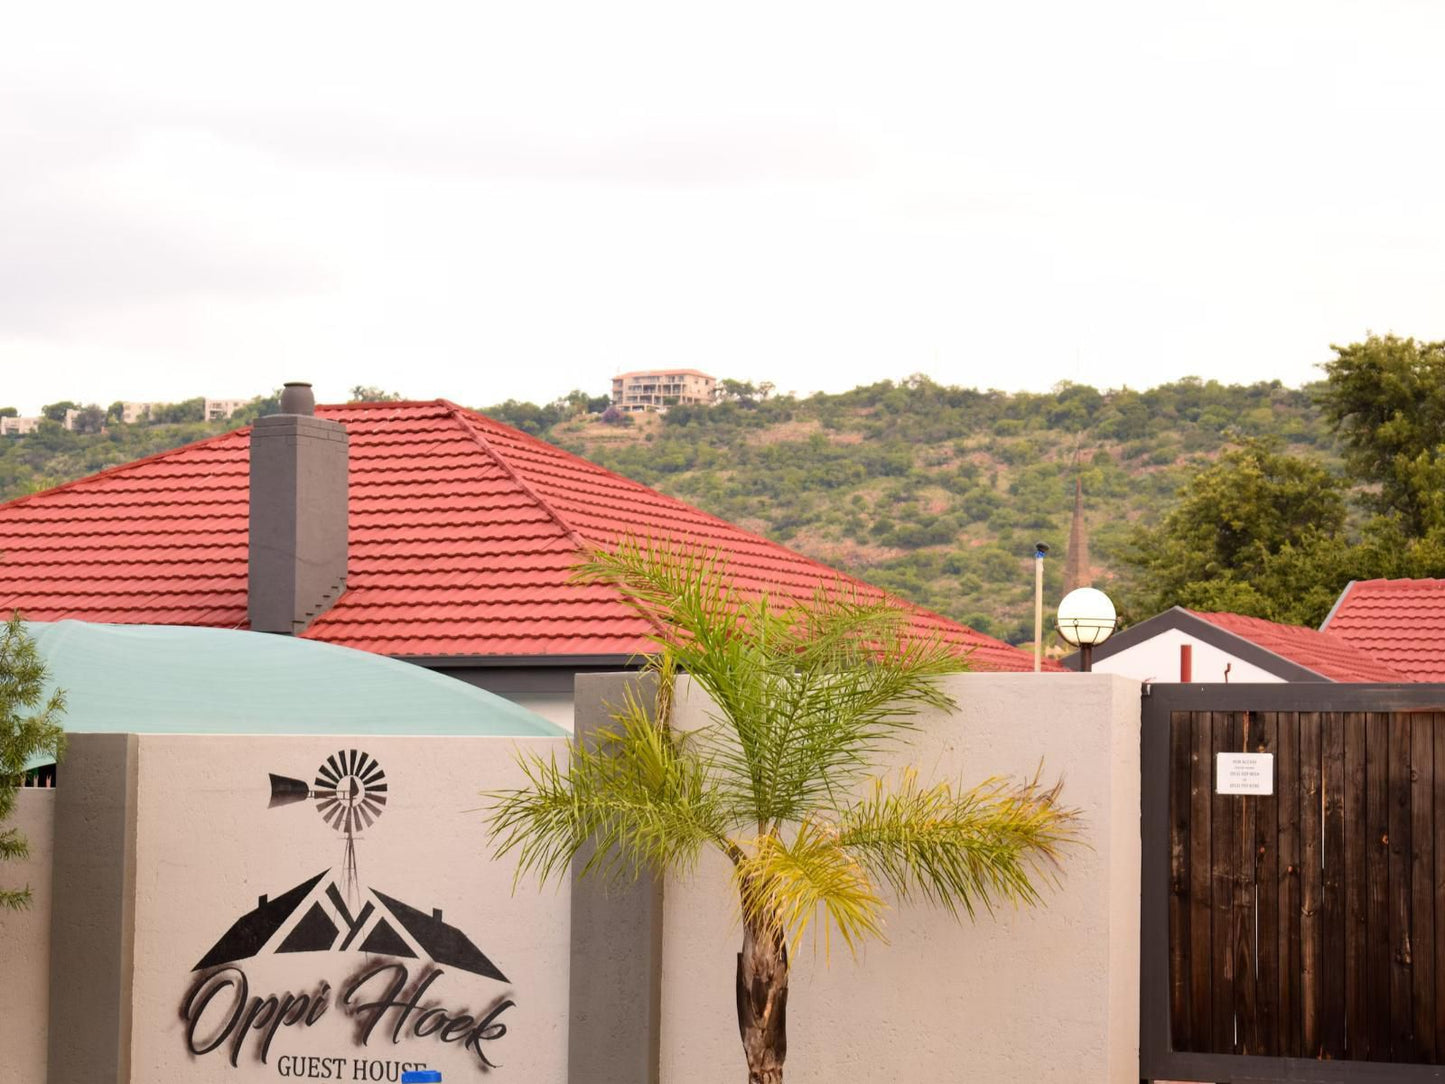 Oppi Hoek Guesthouse Riviera Pretoria Tshwane Gauteng South Africa Building, Architecture, House, Palm Tree, Plant, Nature, Wood